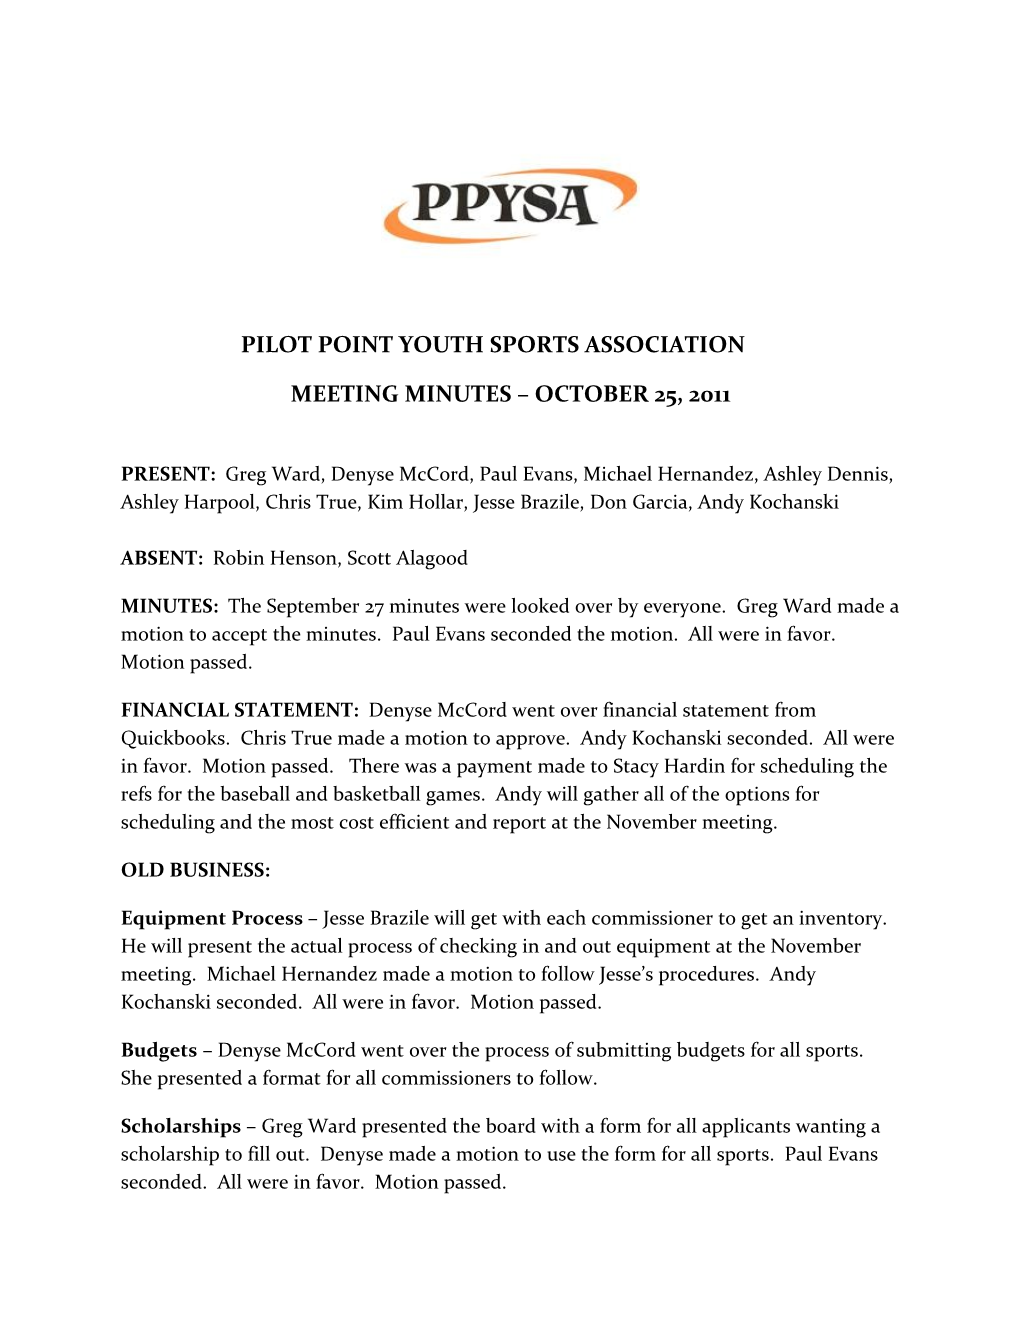 Pilot Point Youth Sports Association